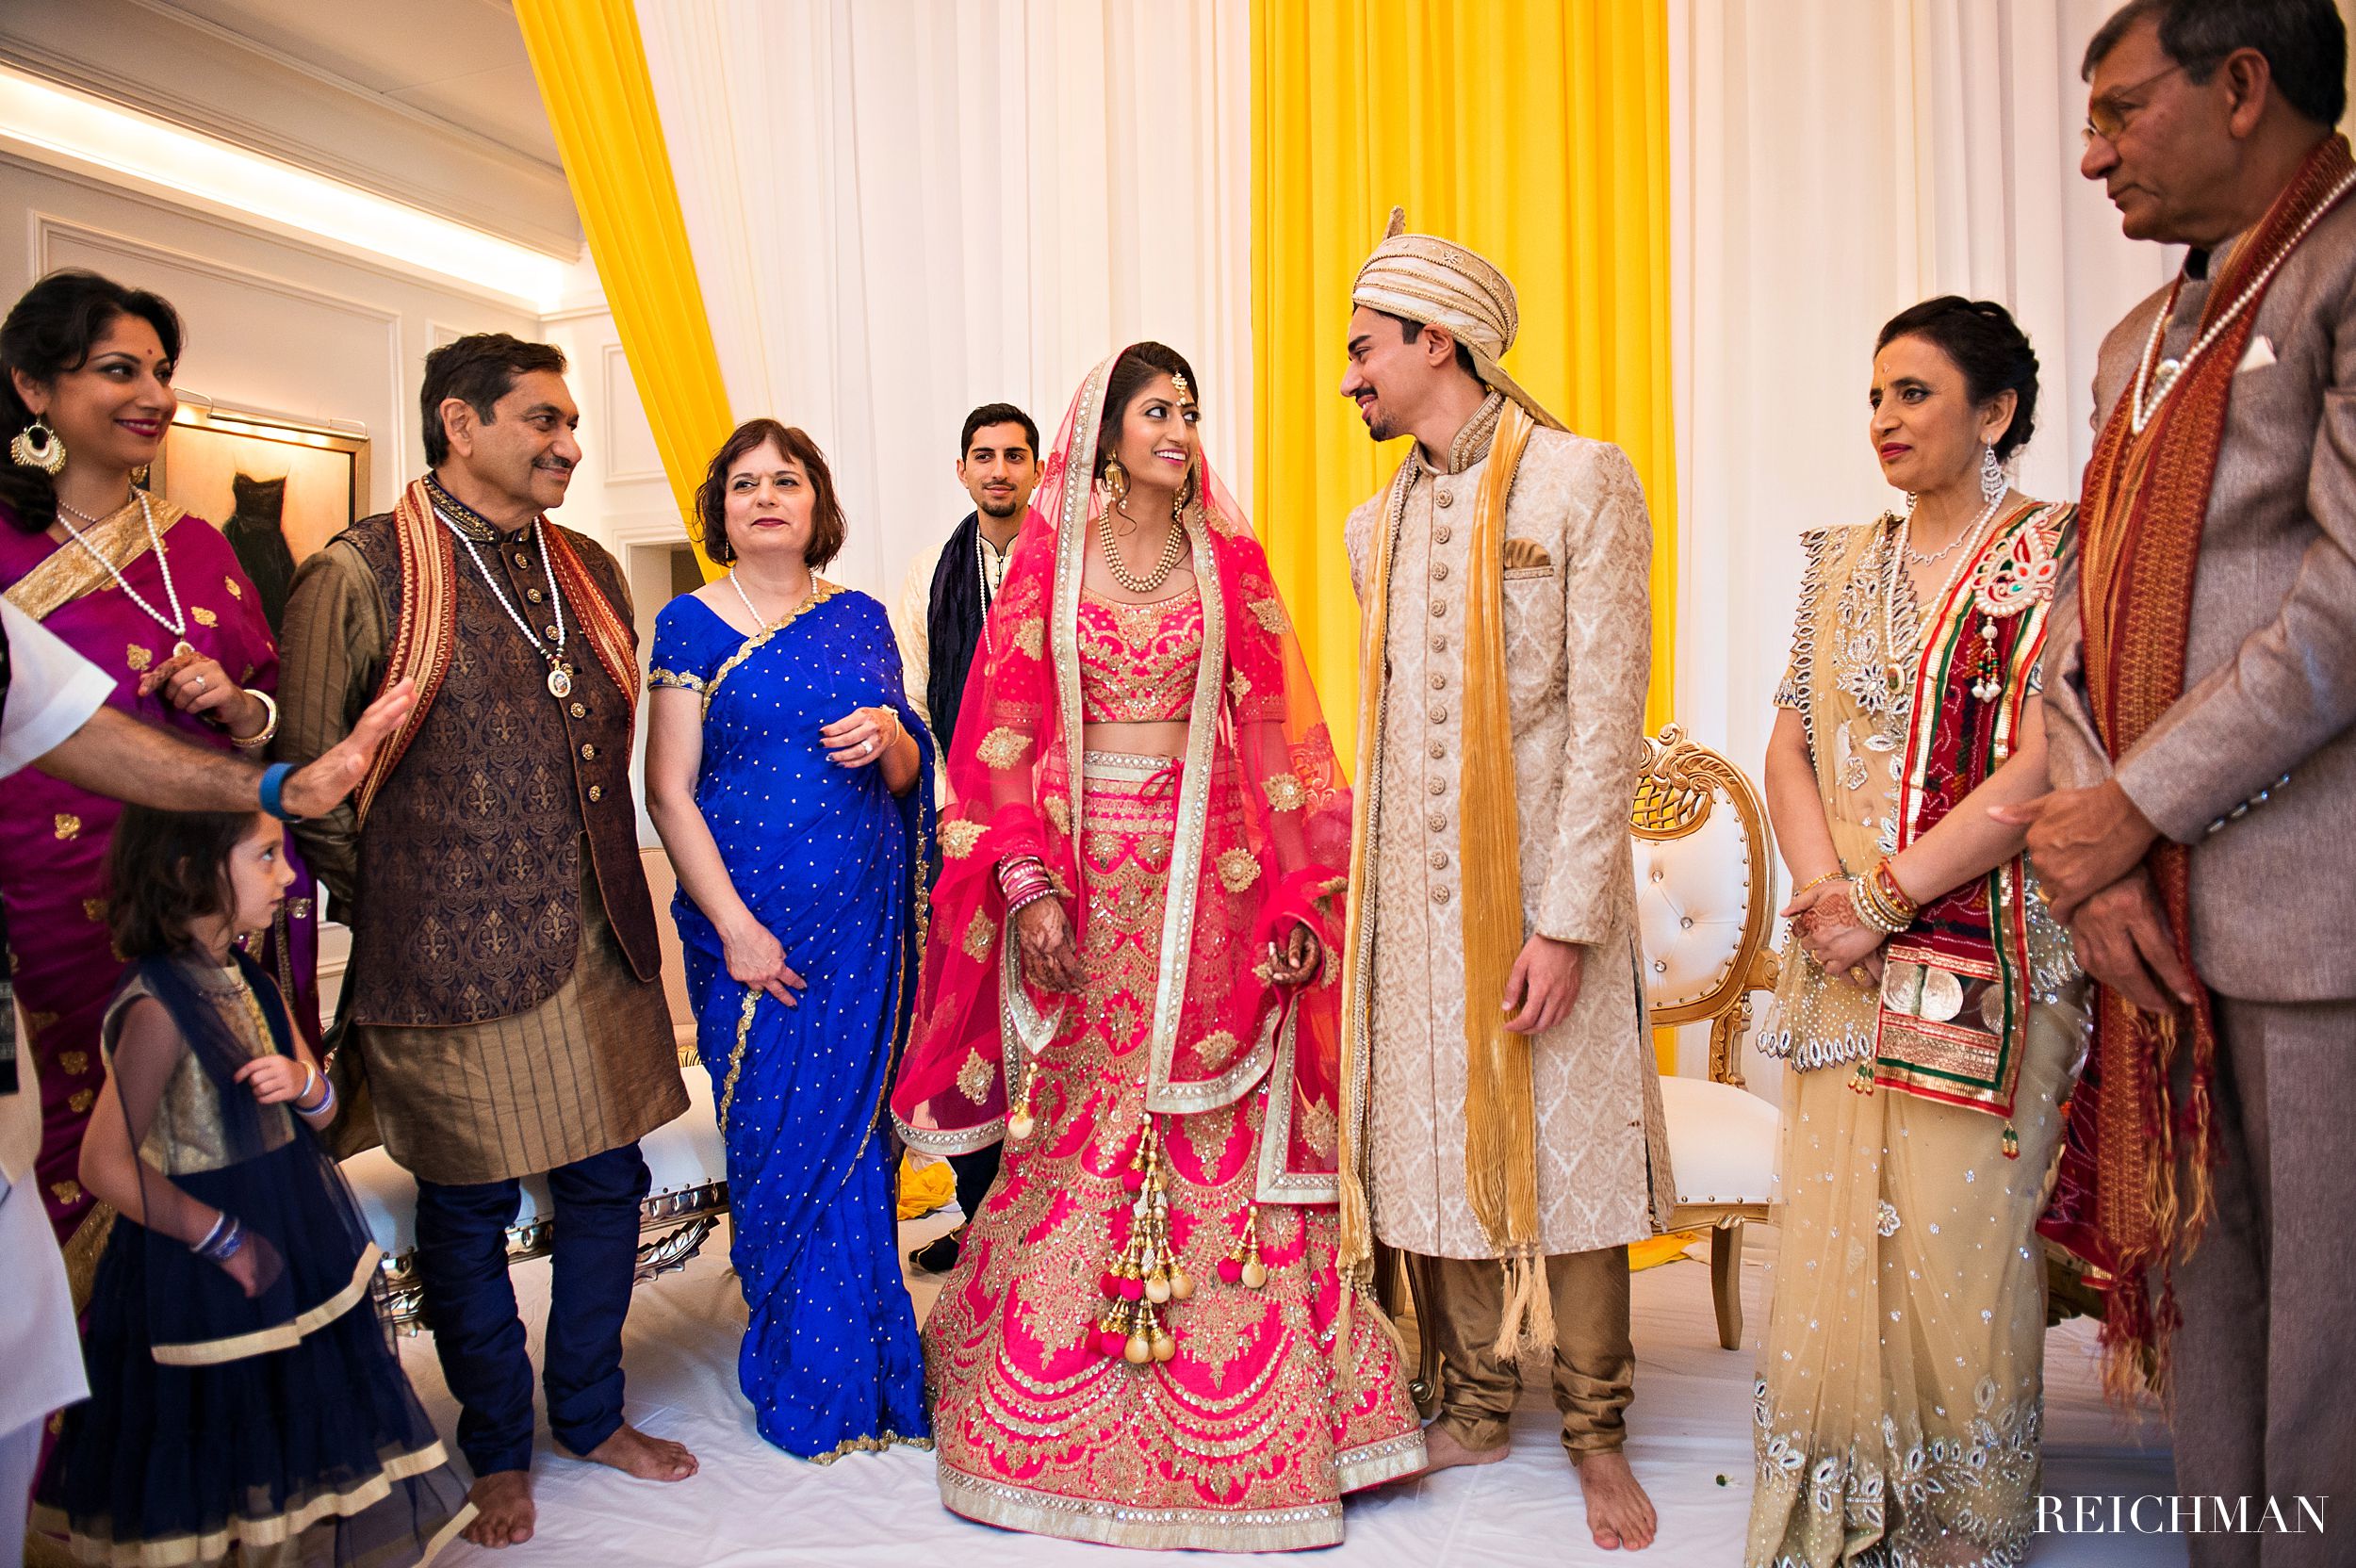 056st-regis-atlanta-hindu-wedding-056